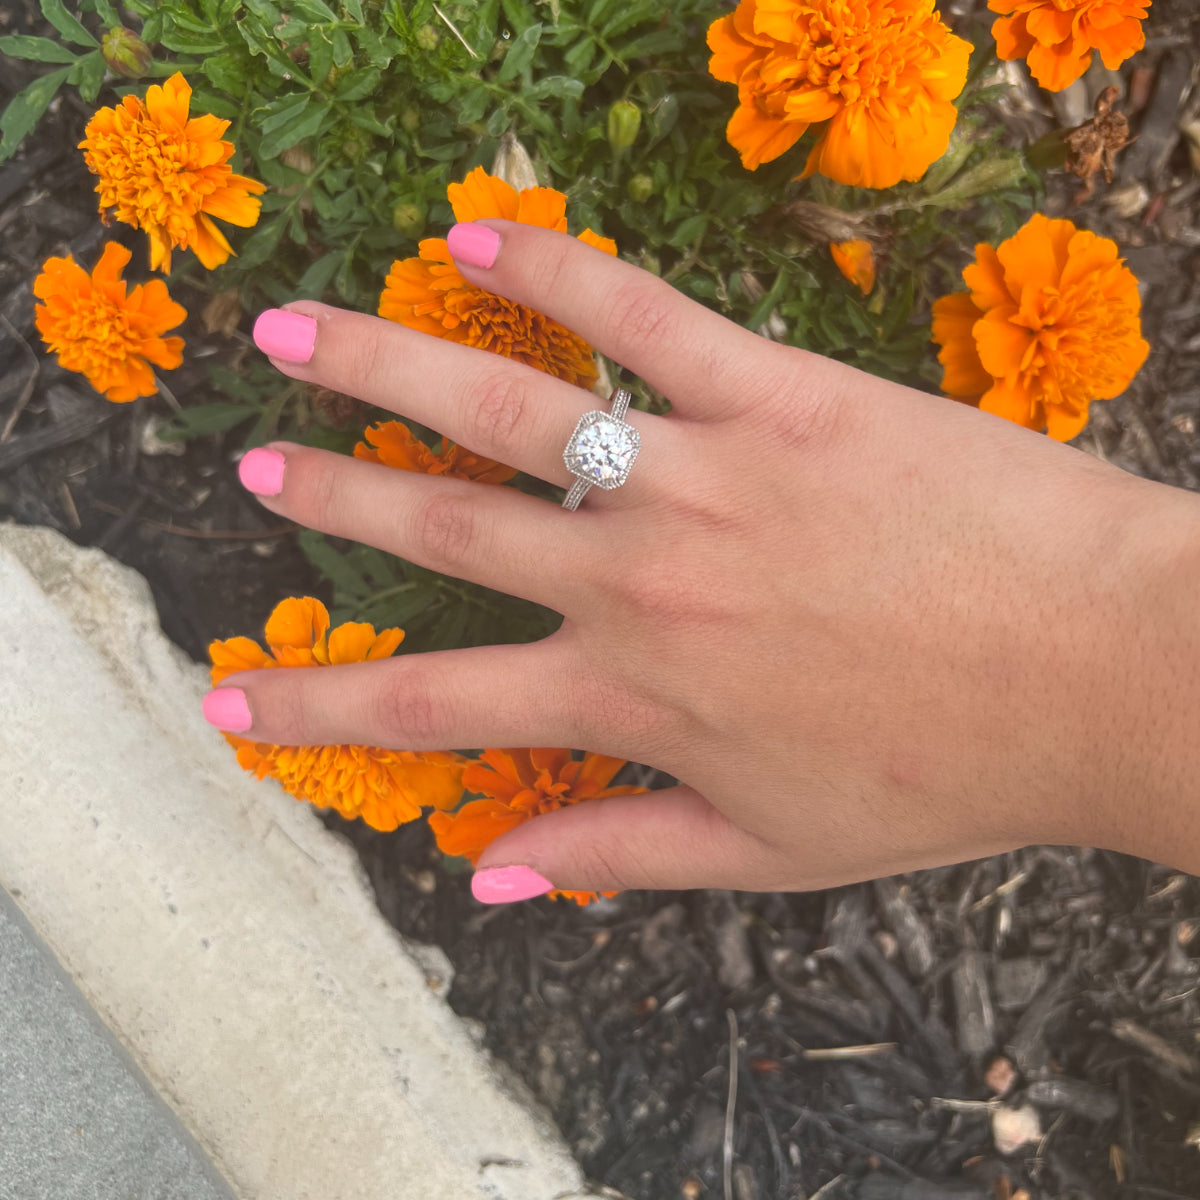 Wallflower Round Diamond Engagement Ring (Lab Grown Igi Cert) whitegold